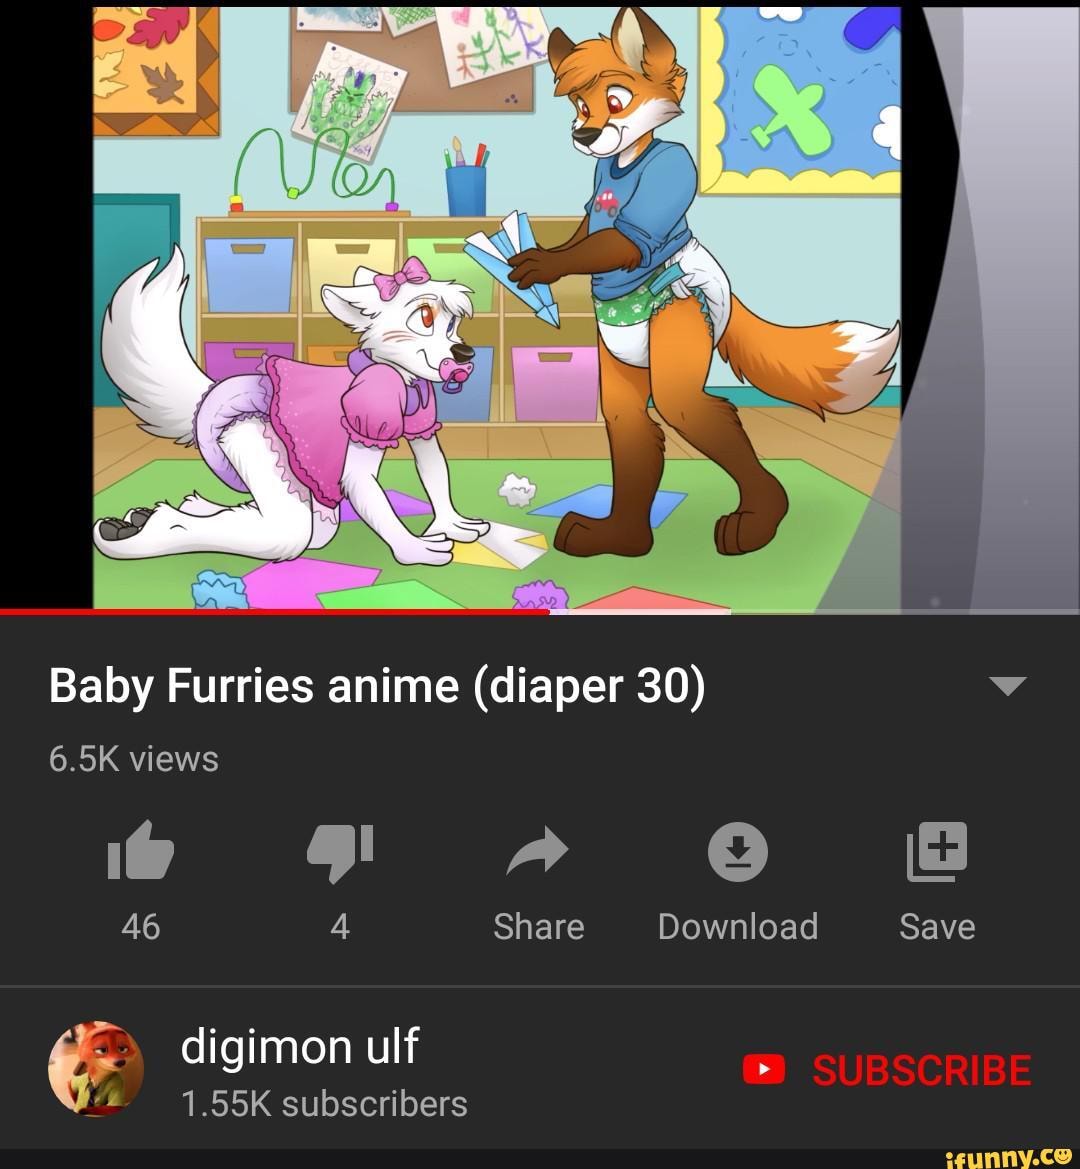 Baby Furries anime (diaper 30) v digimon ulf.